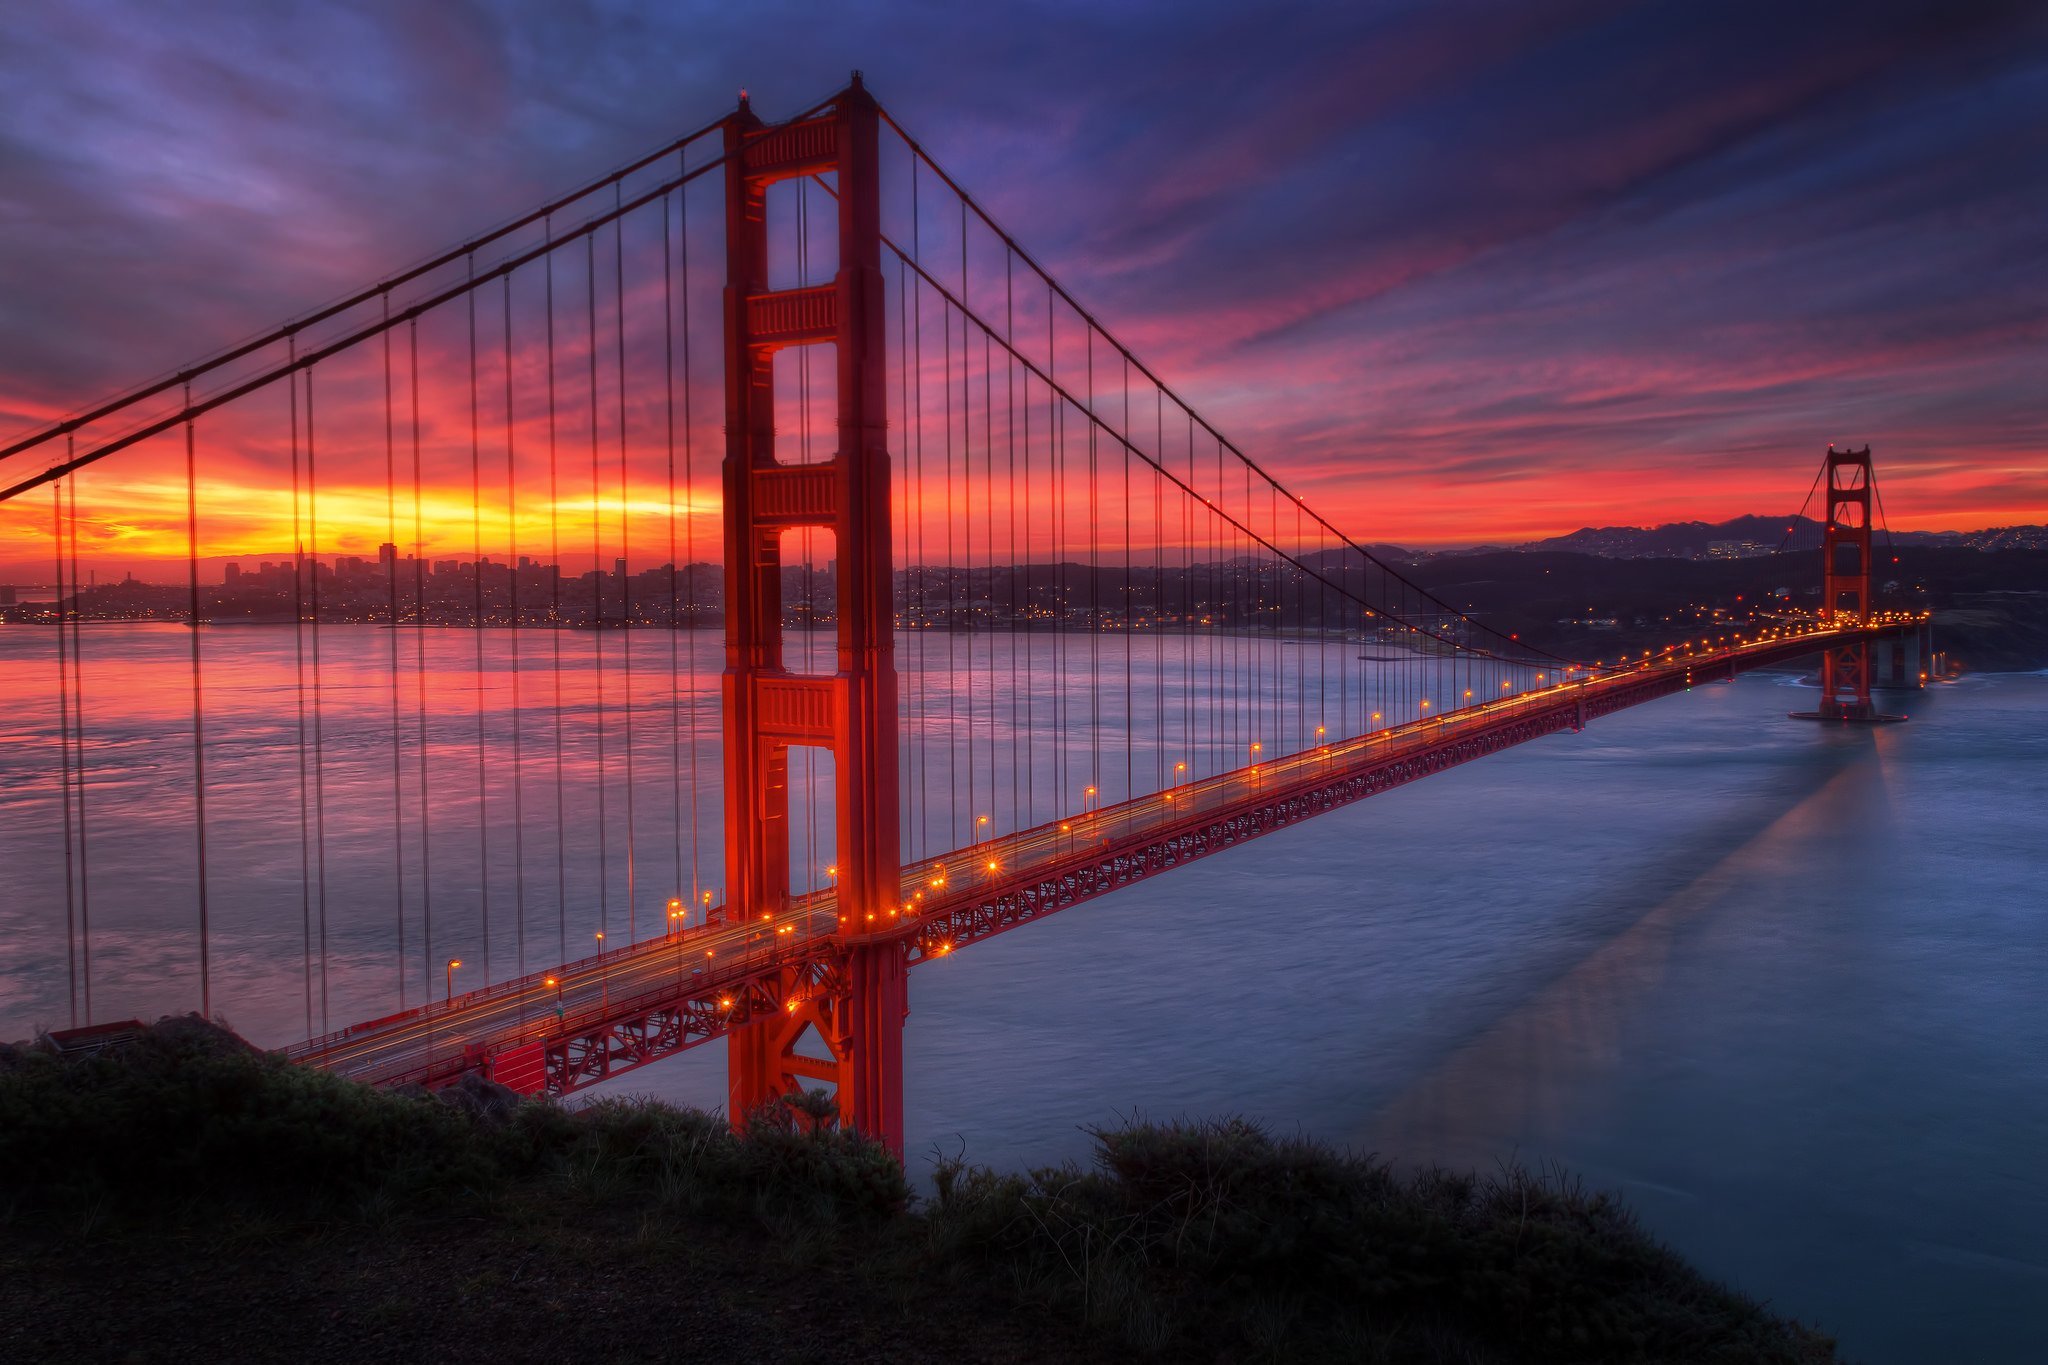 Сан франциско какой. Мост Сан Франциско. Мост золотые ворота в Сан-Франциско. Мост «золотые ворота», Сан-Франциско, Калифорния, США. Мост Голден гейт Сан Франциско.